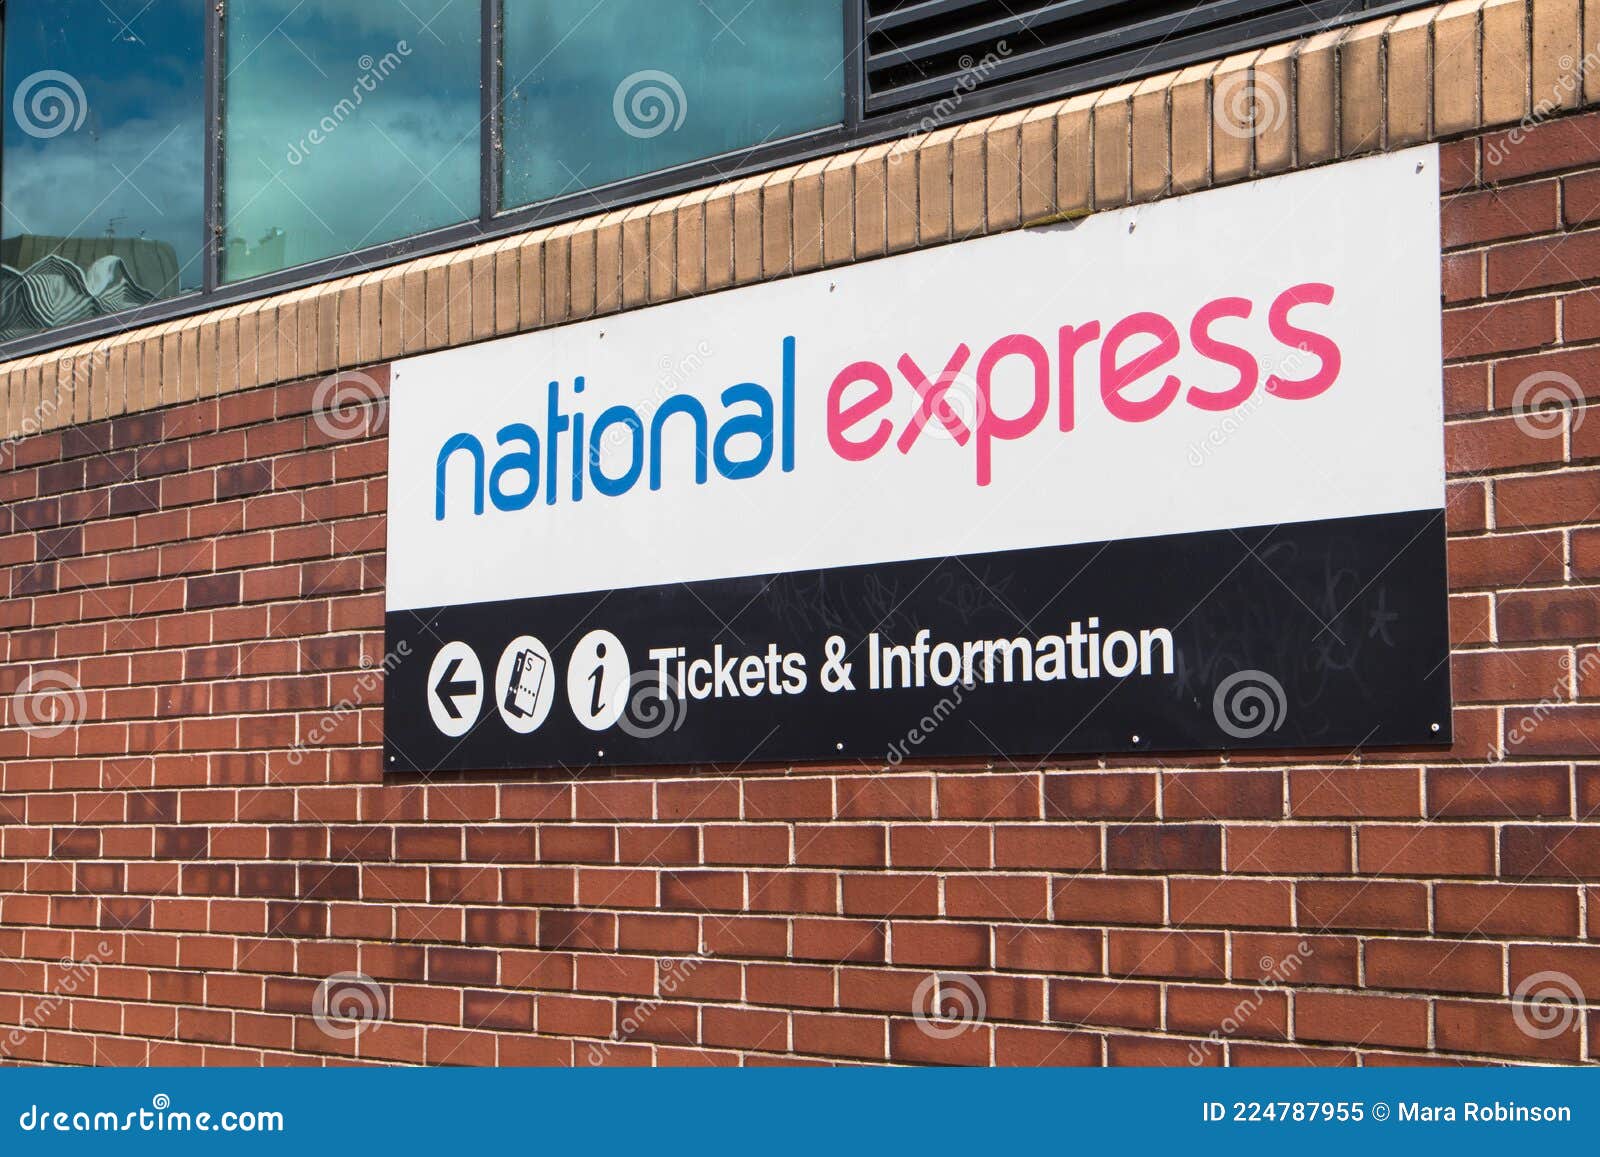 national express travel shop near me